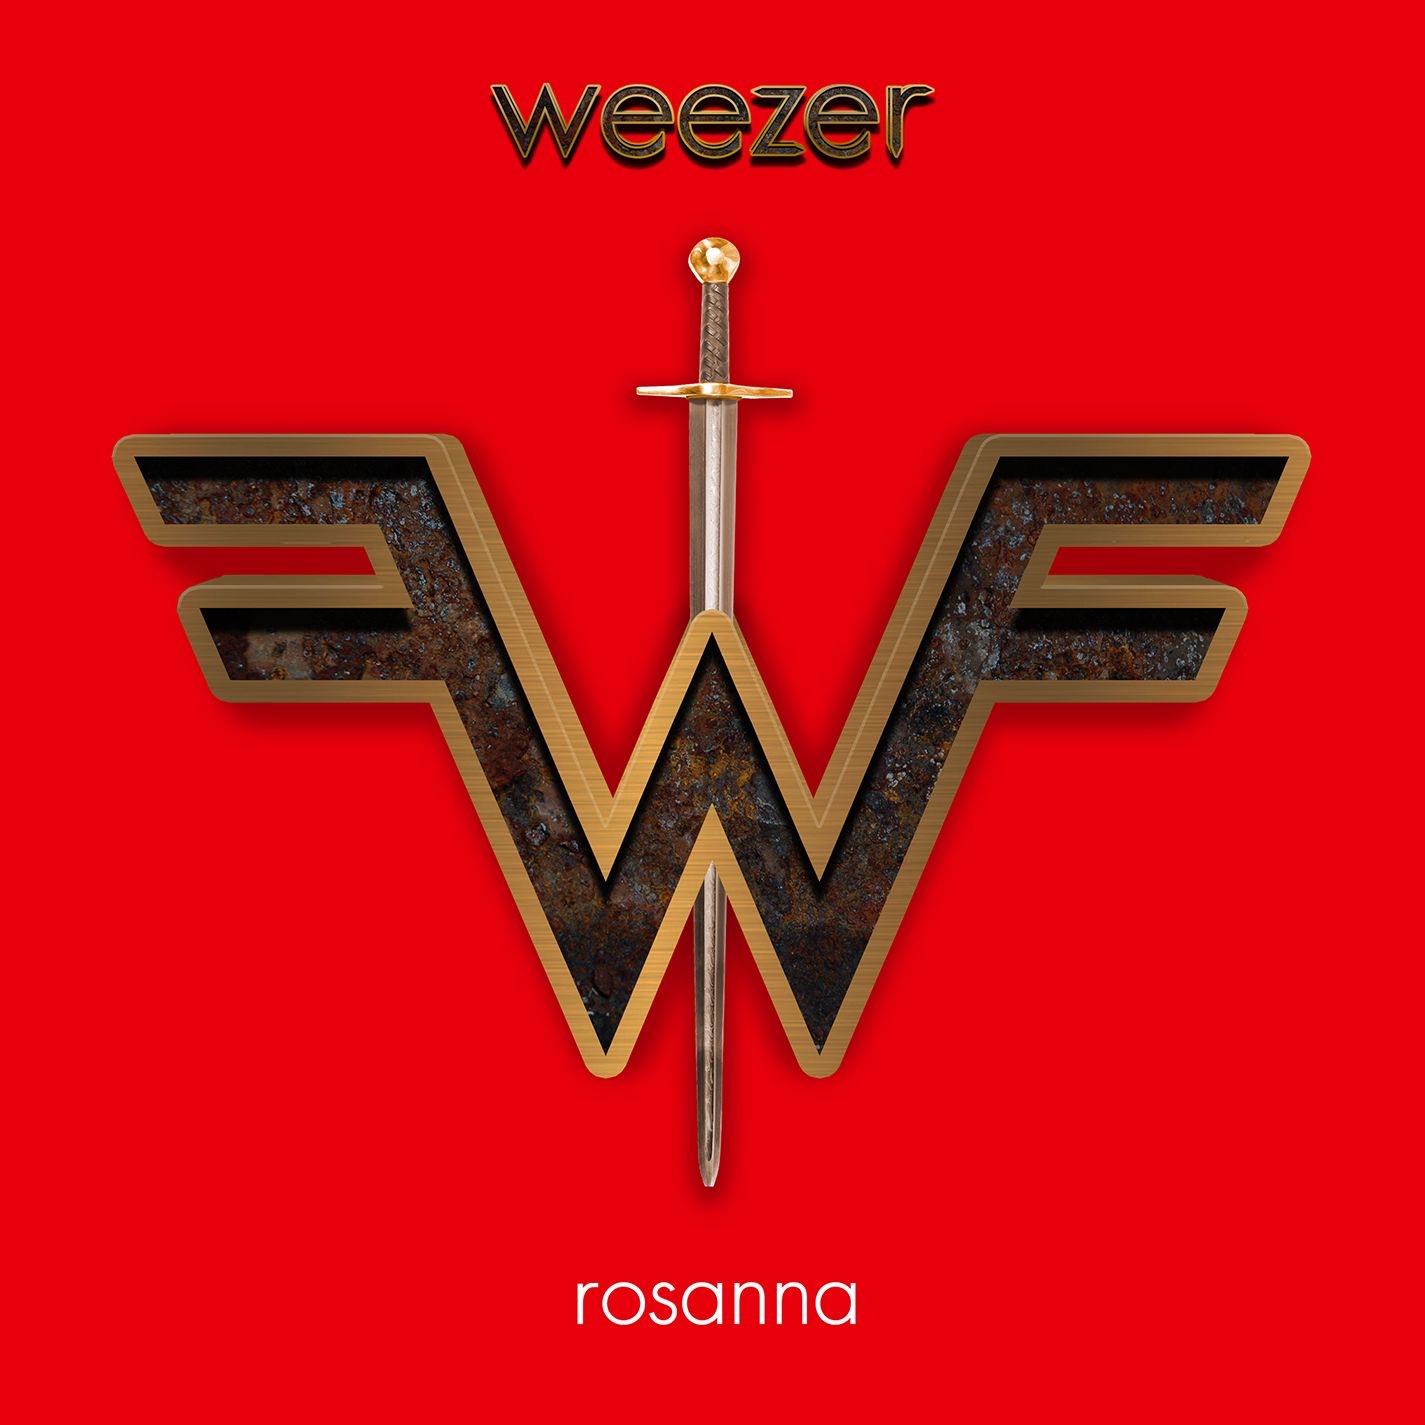 Art for Rosanna by Weezer